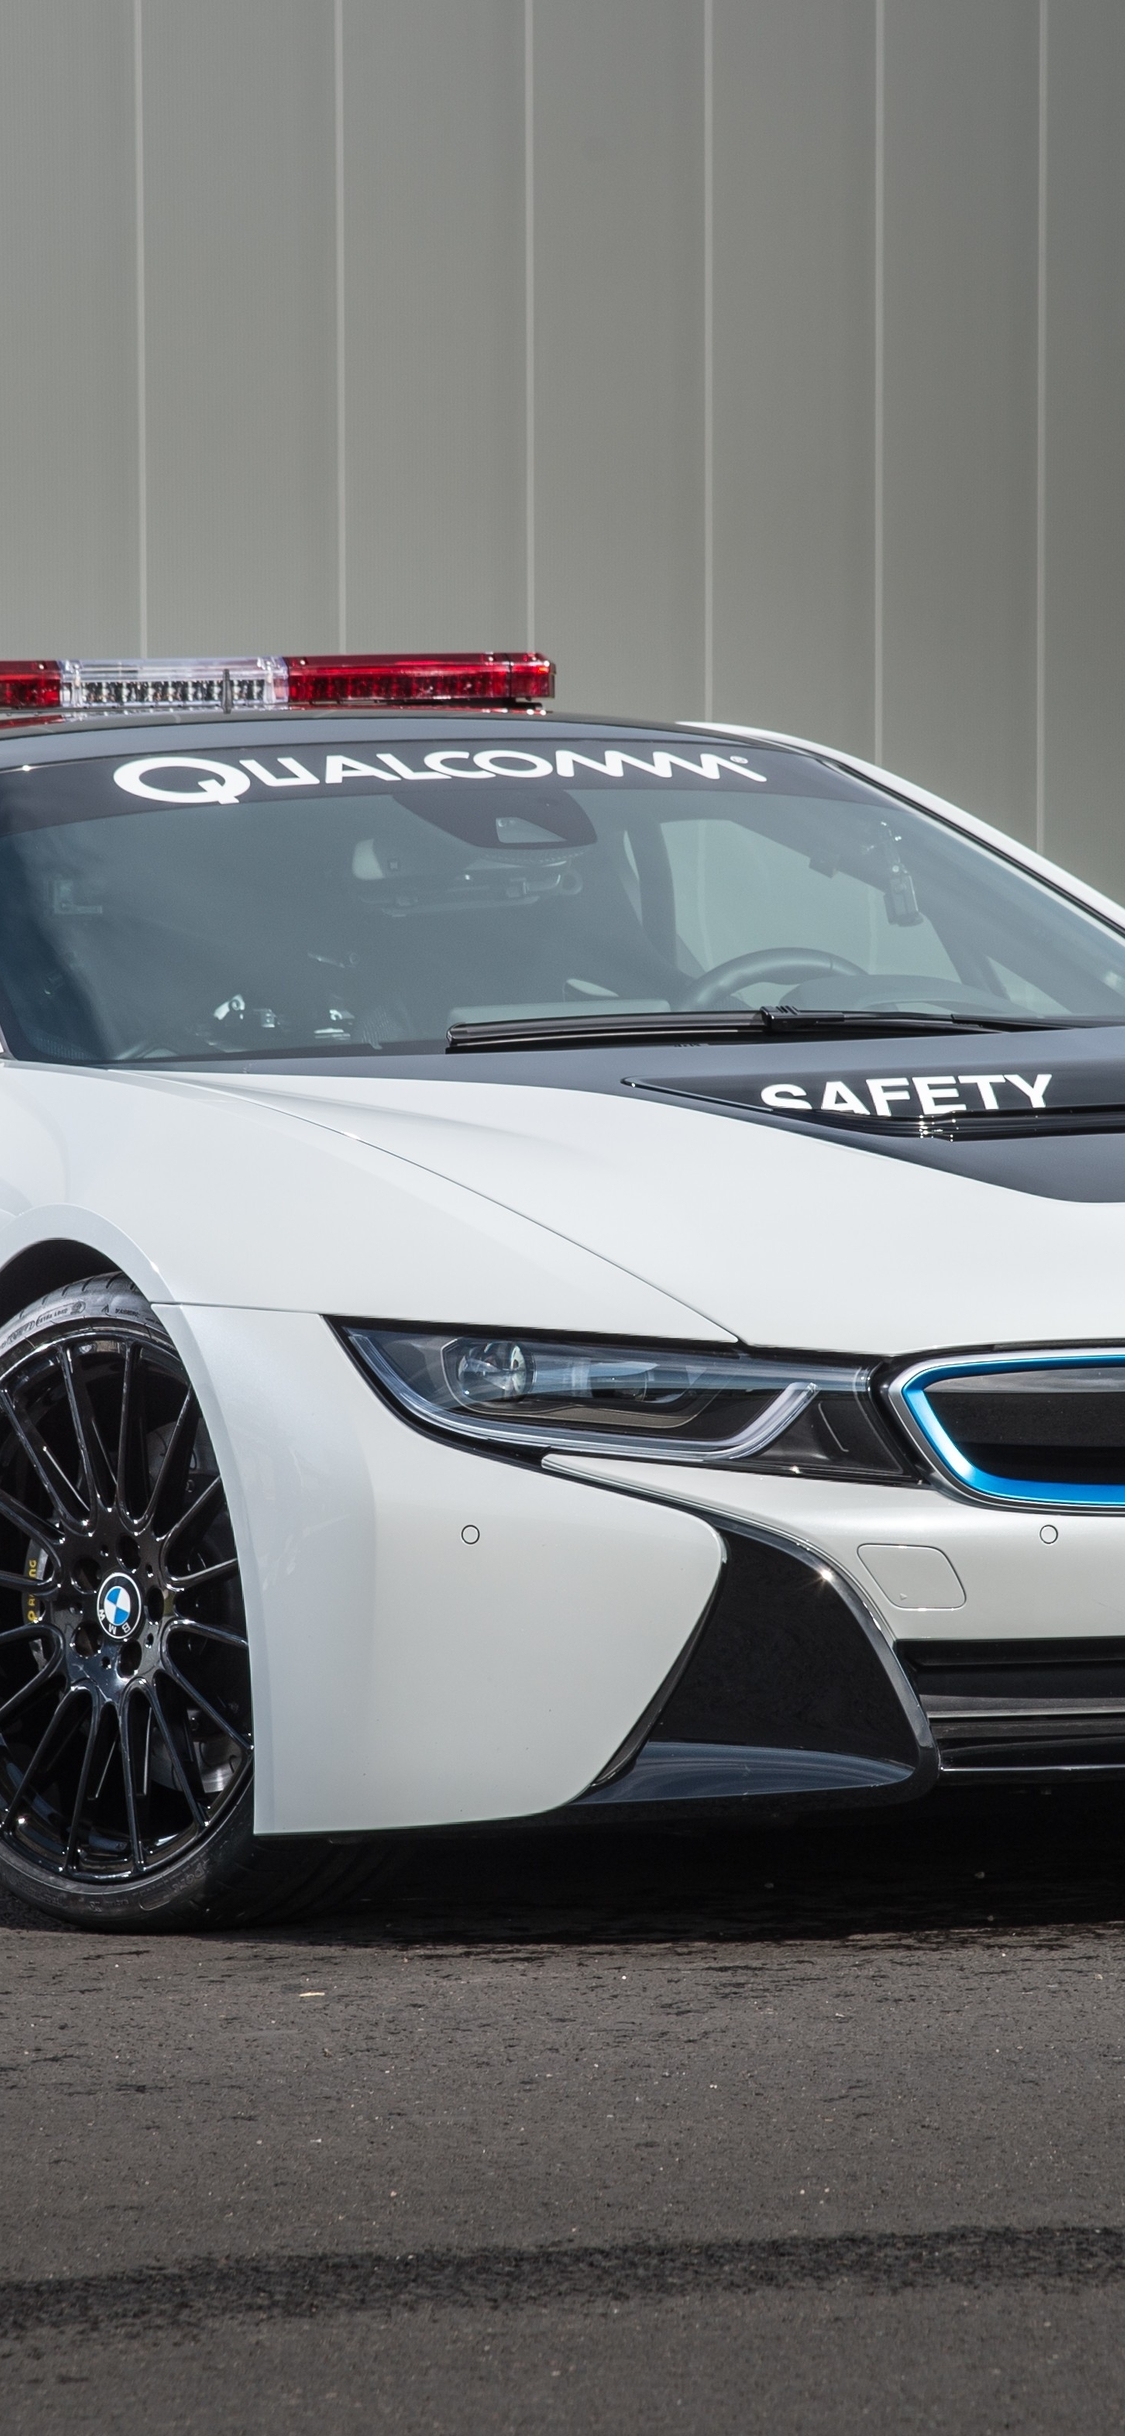 Image: BMW, i8, safety car, white, super car, electric car, flashing lights, asphalt